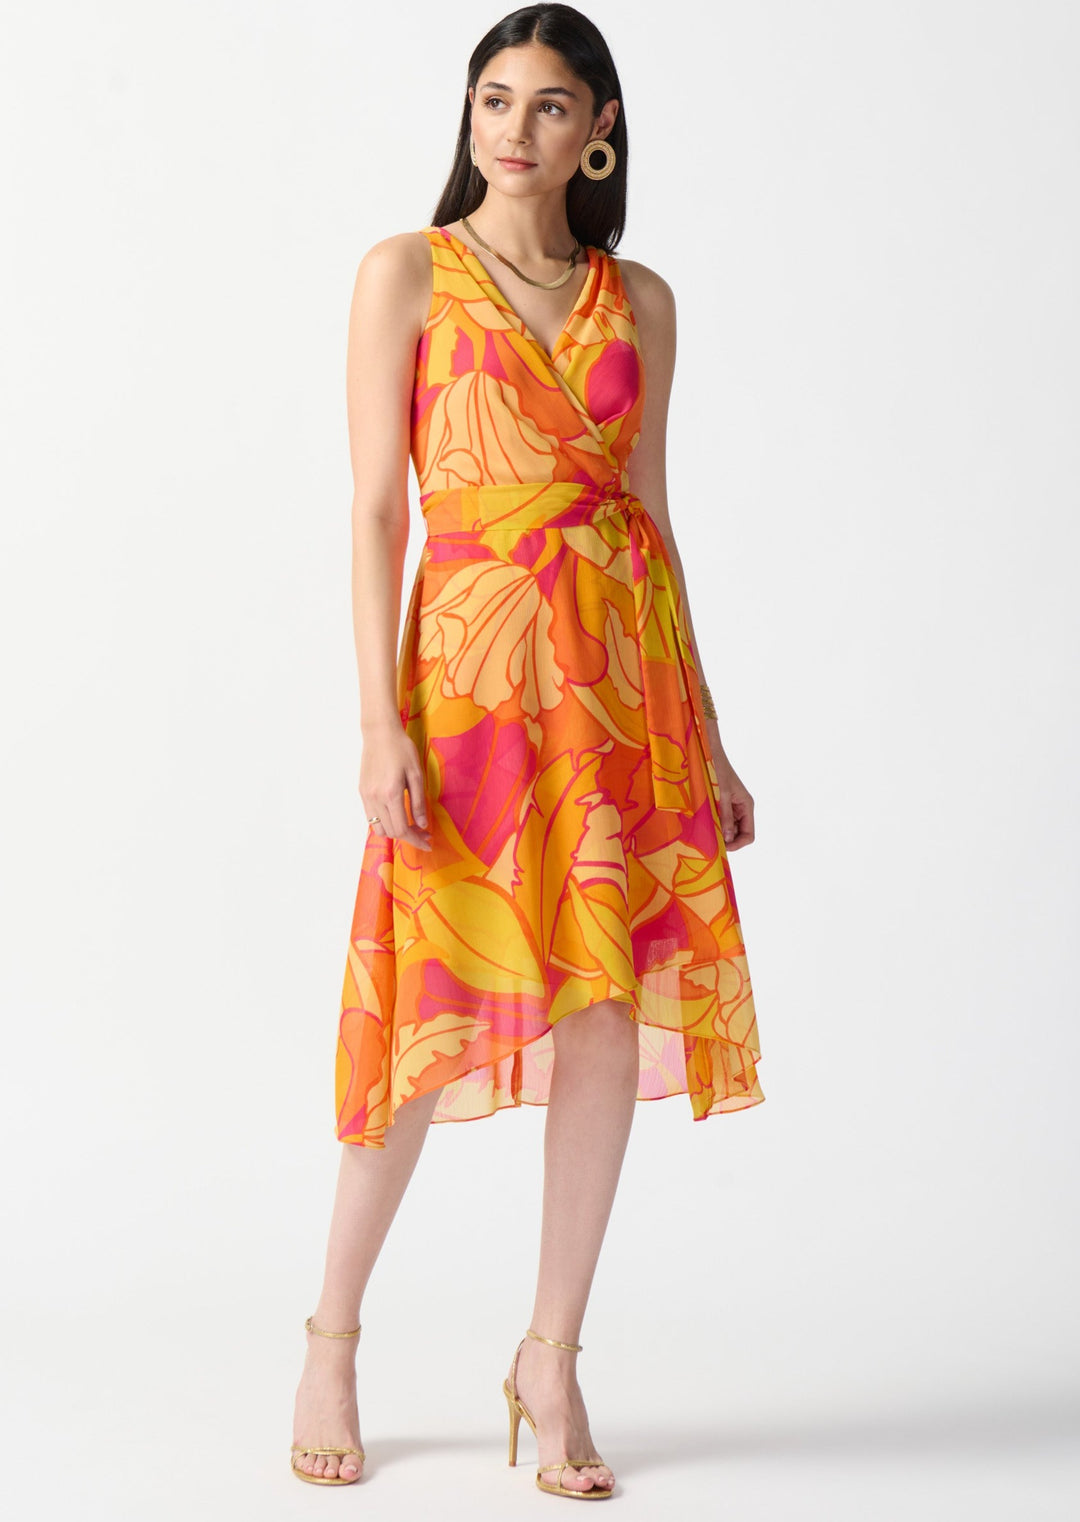 Joseph Ribkoff - Chiffon Tropical Print Fit and Flare Dress